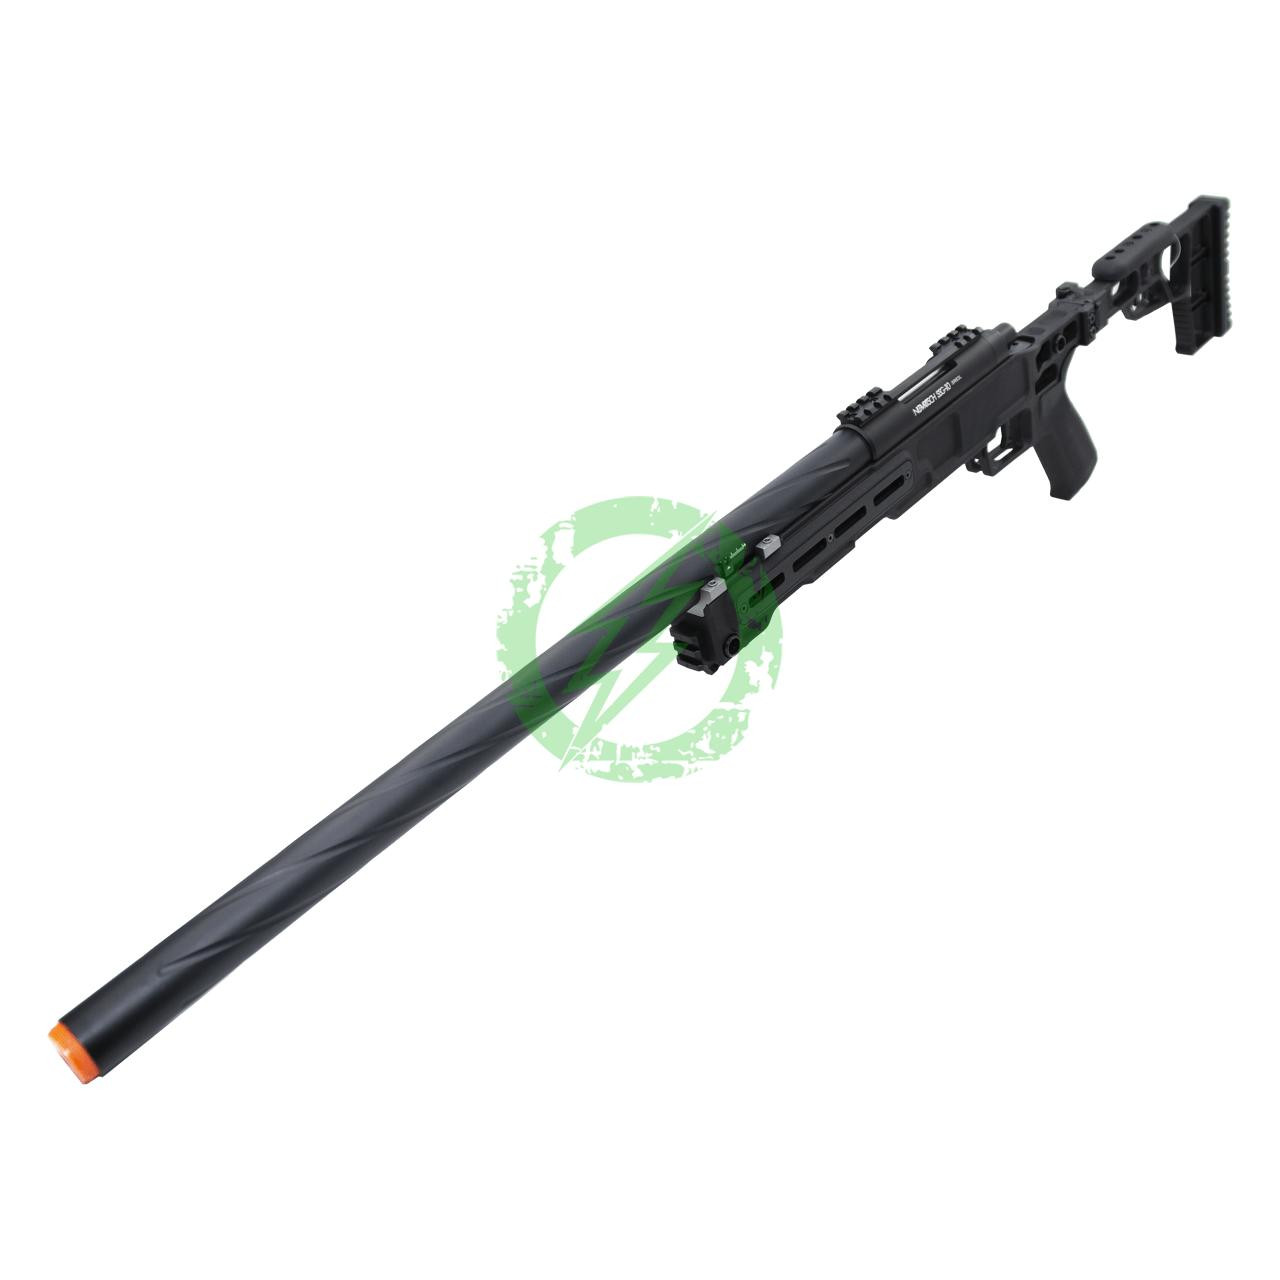 Novritsch NOVRITSCH SSG10 A3 Long Sniper Rifle | Skeletonized Folding Stock 